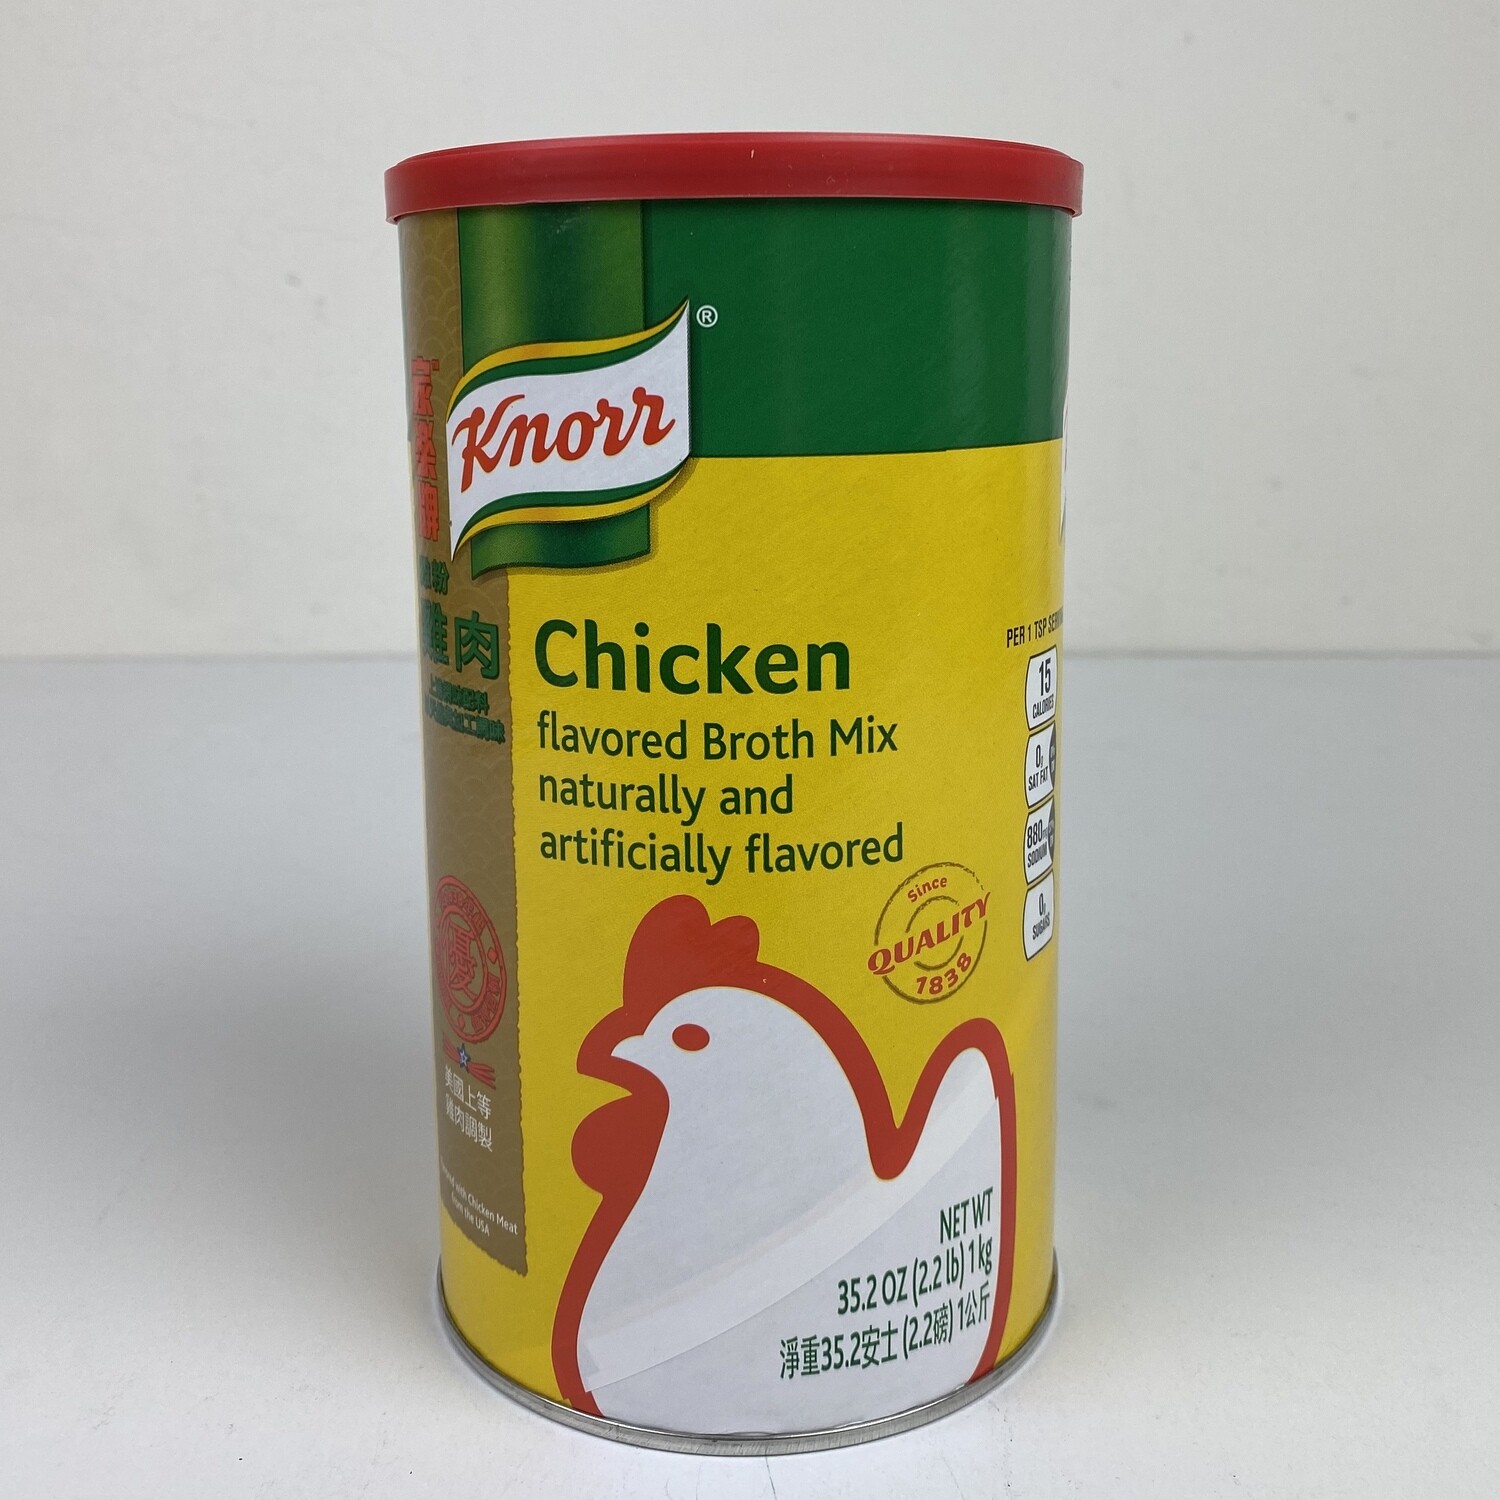 KNORR Chicken Broth Mix Flavour 2.2LB 家乐牌鸡粉(罐)